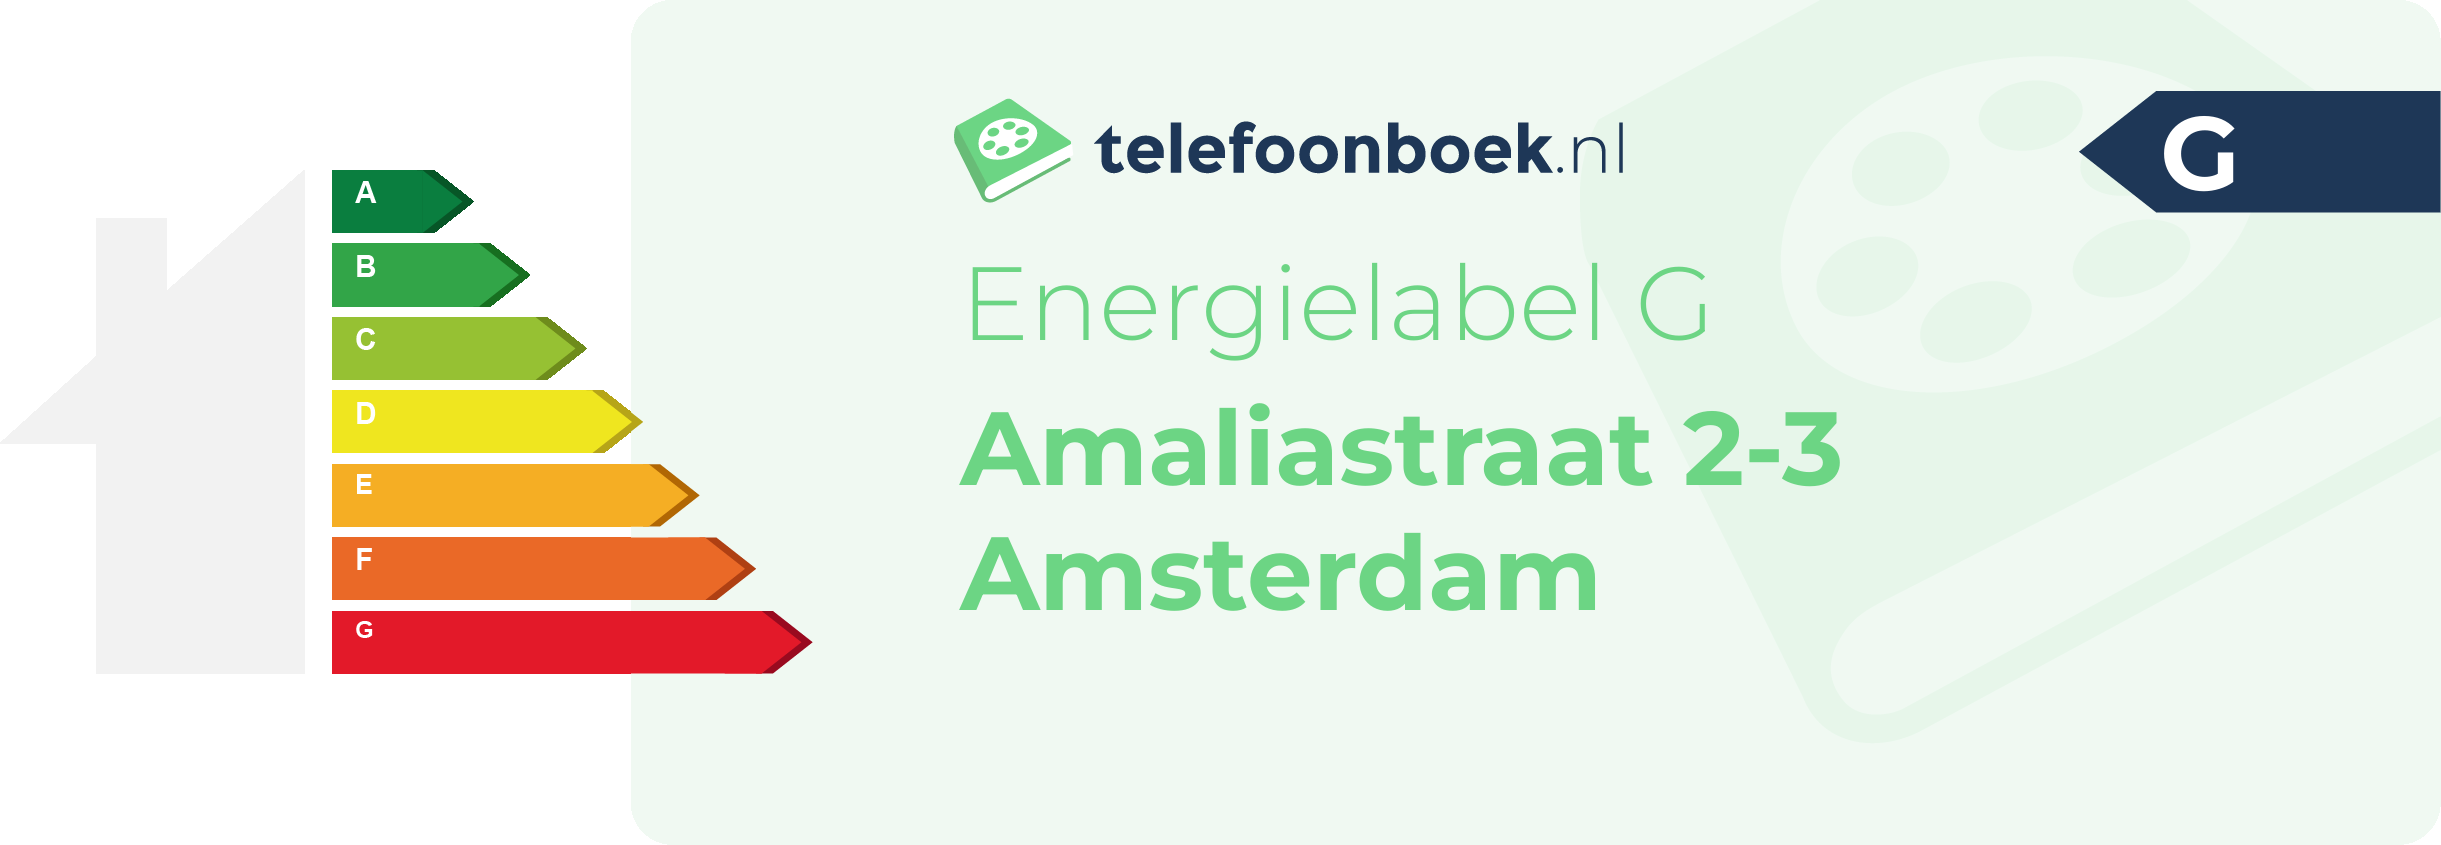 Energielabel Amaliastraat 2-3 Amsterdam